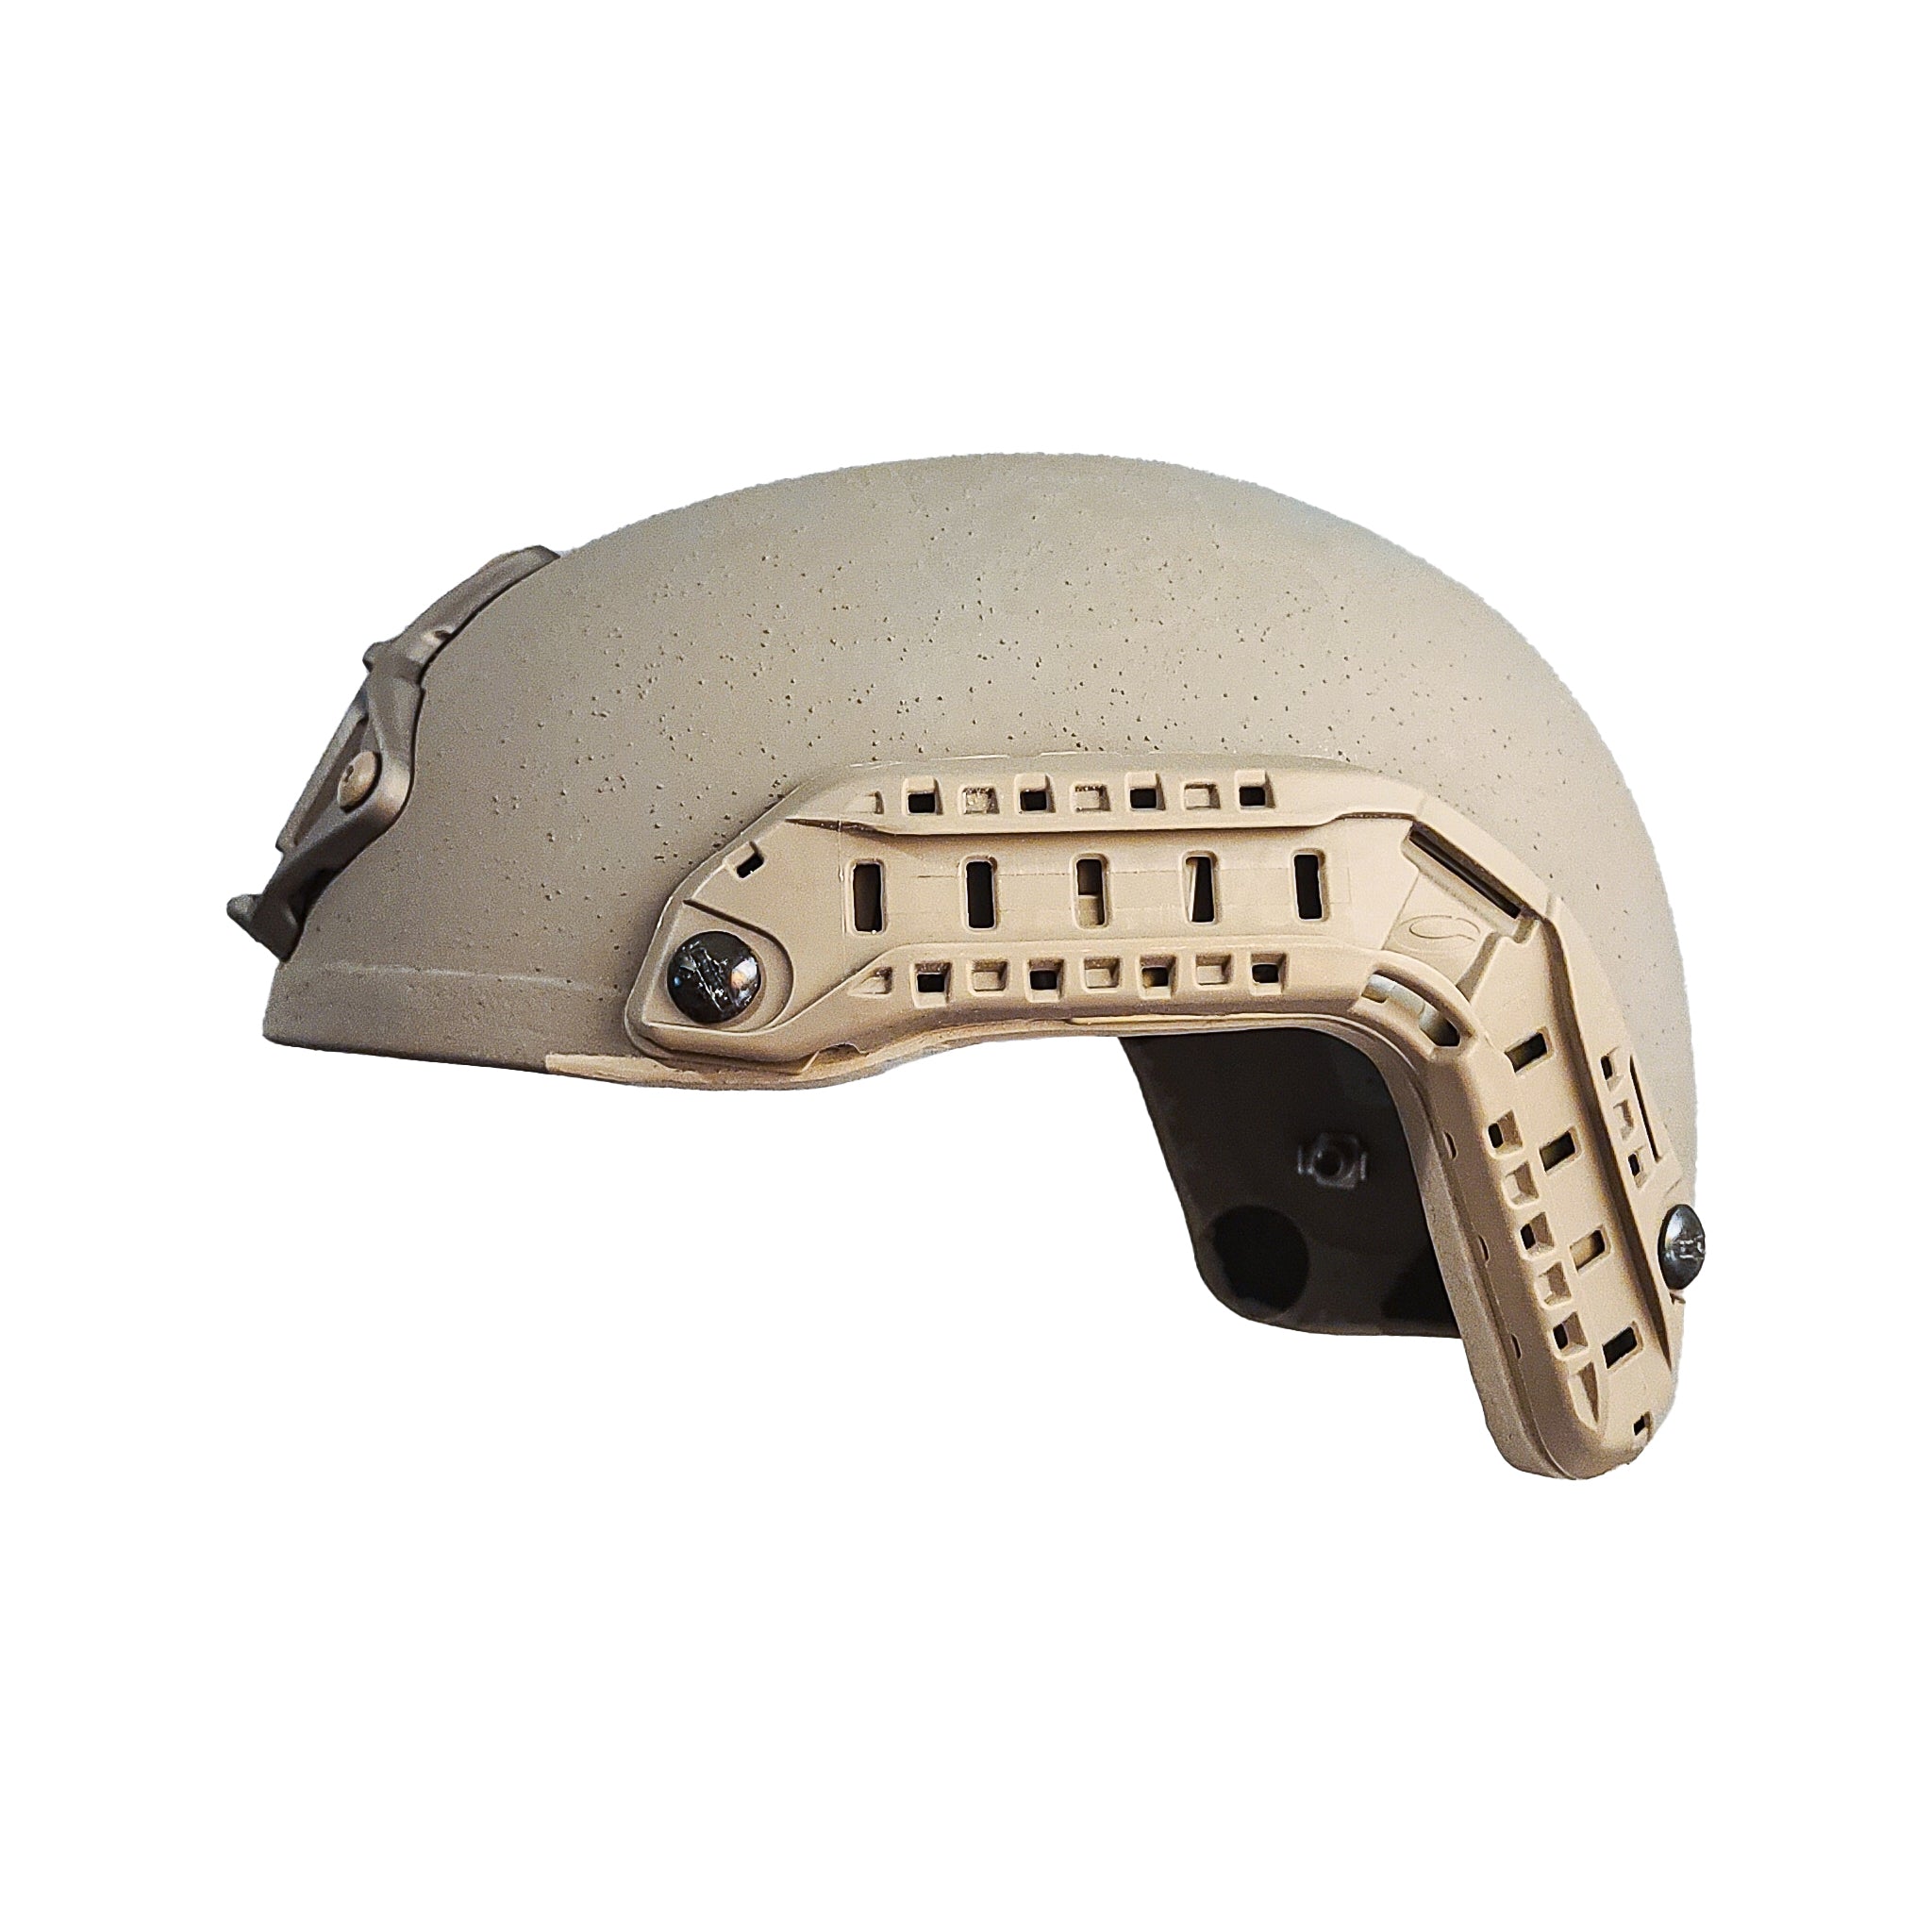 Helmet Modification Service